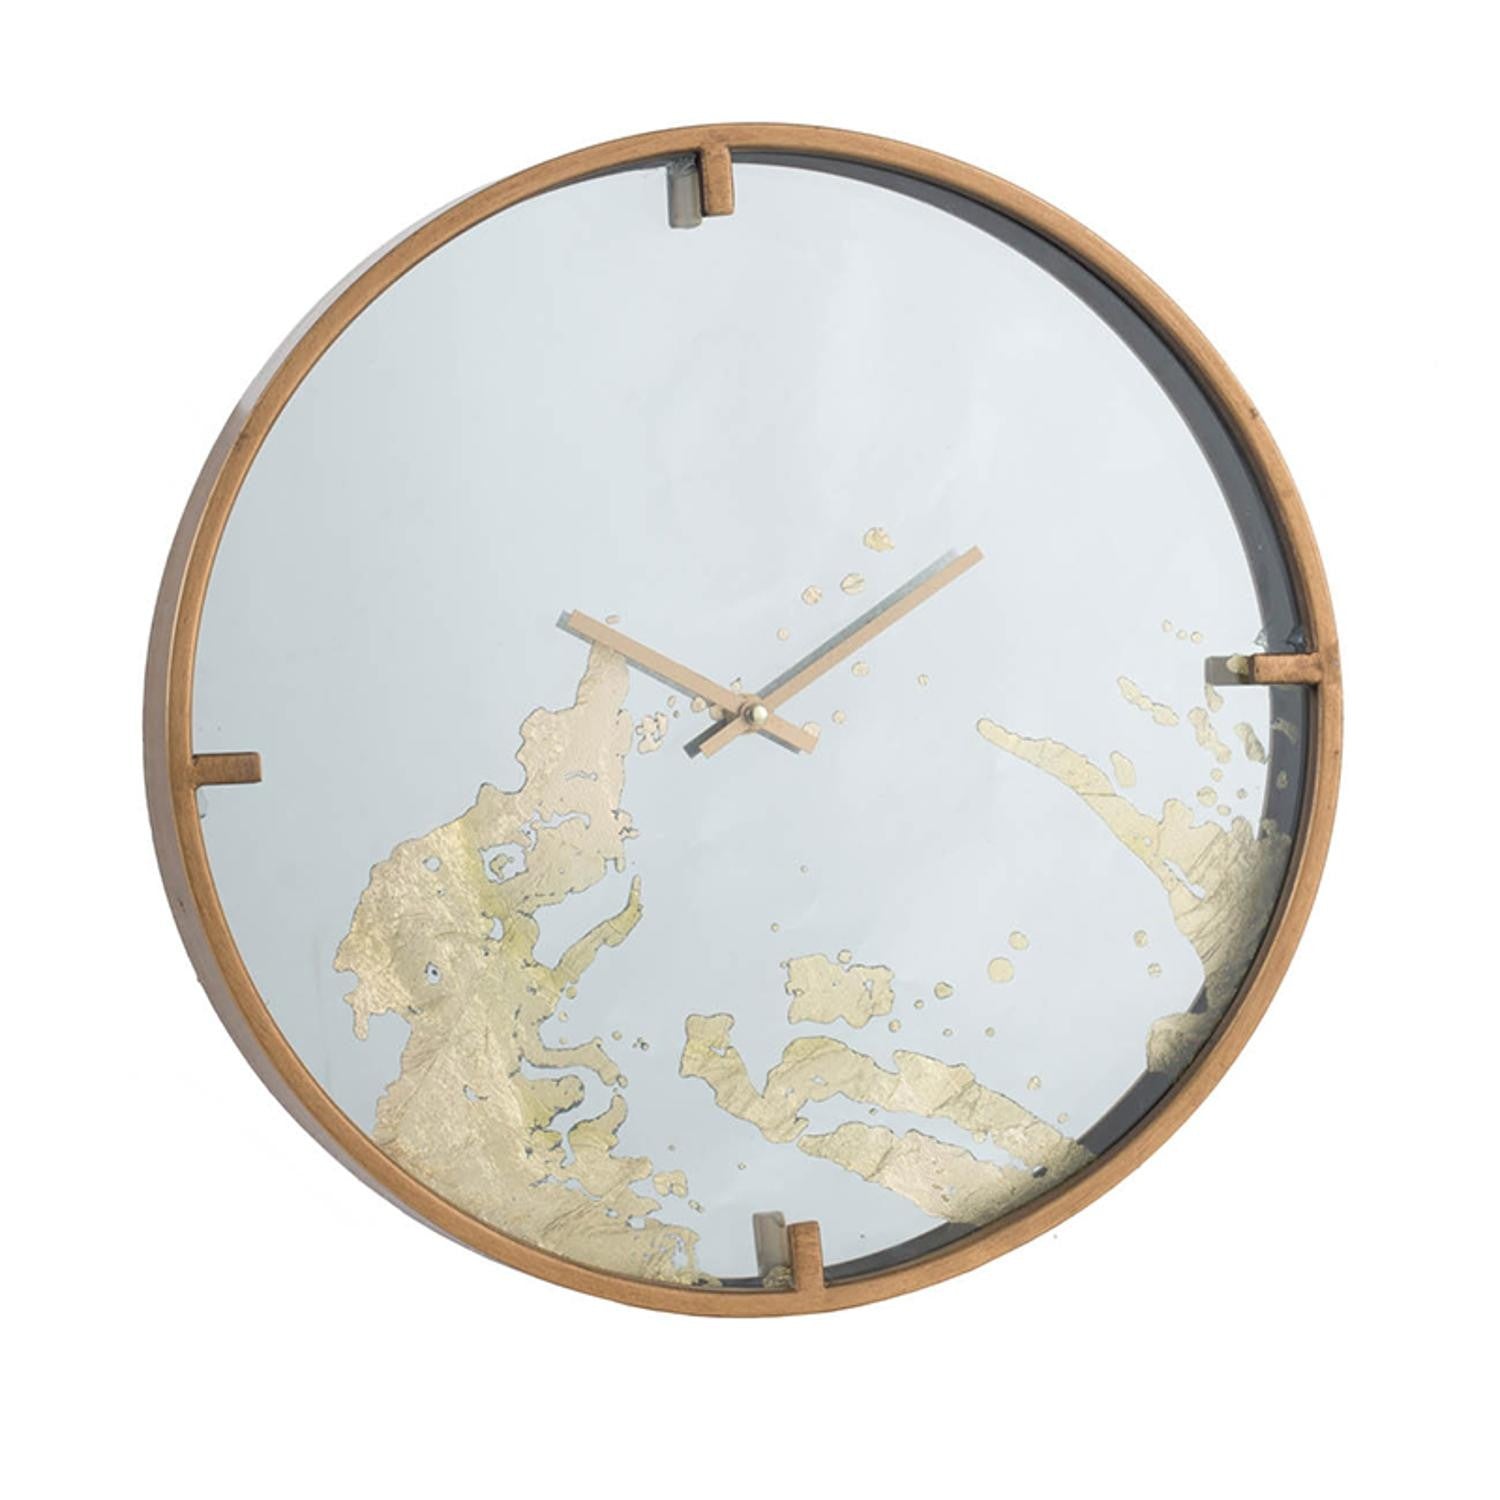 2" Round Gold And White Wood Analog Wall Clock